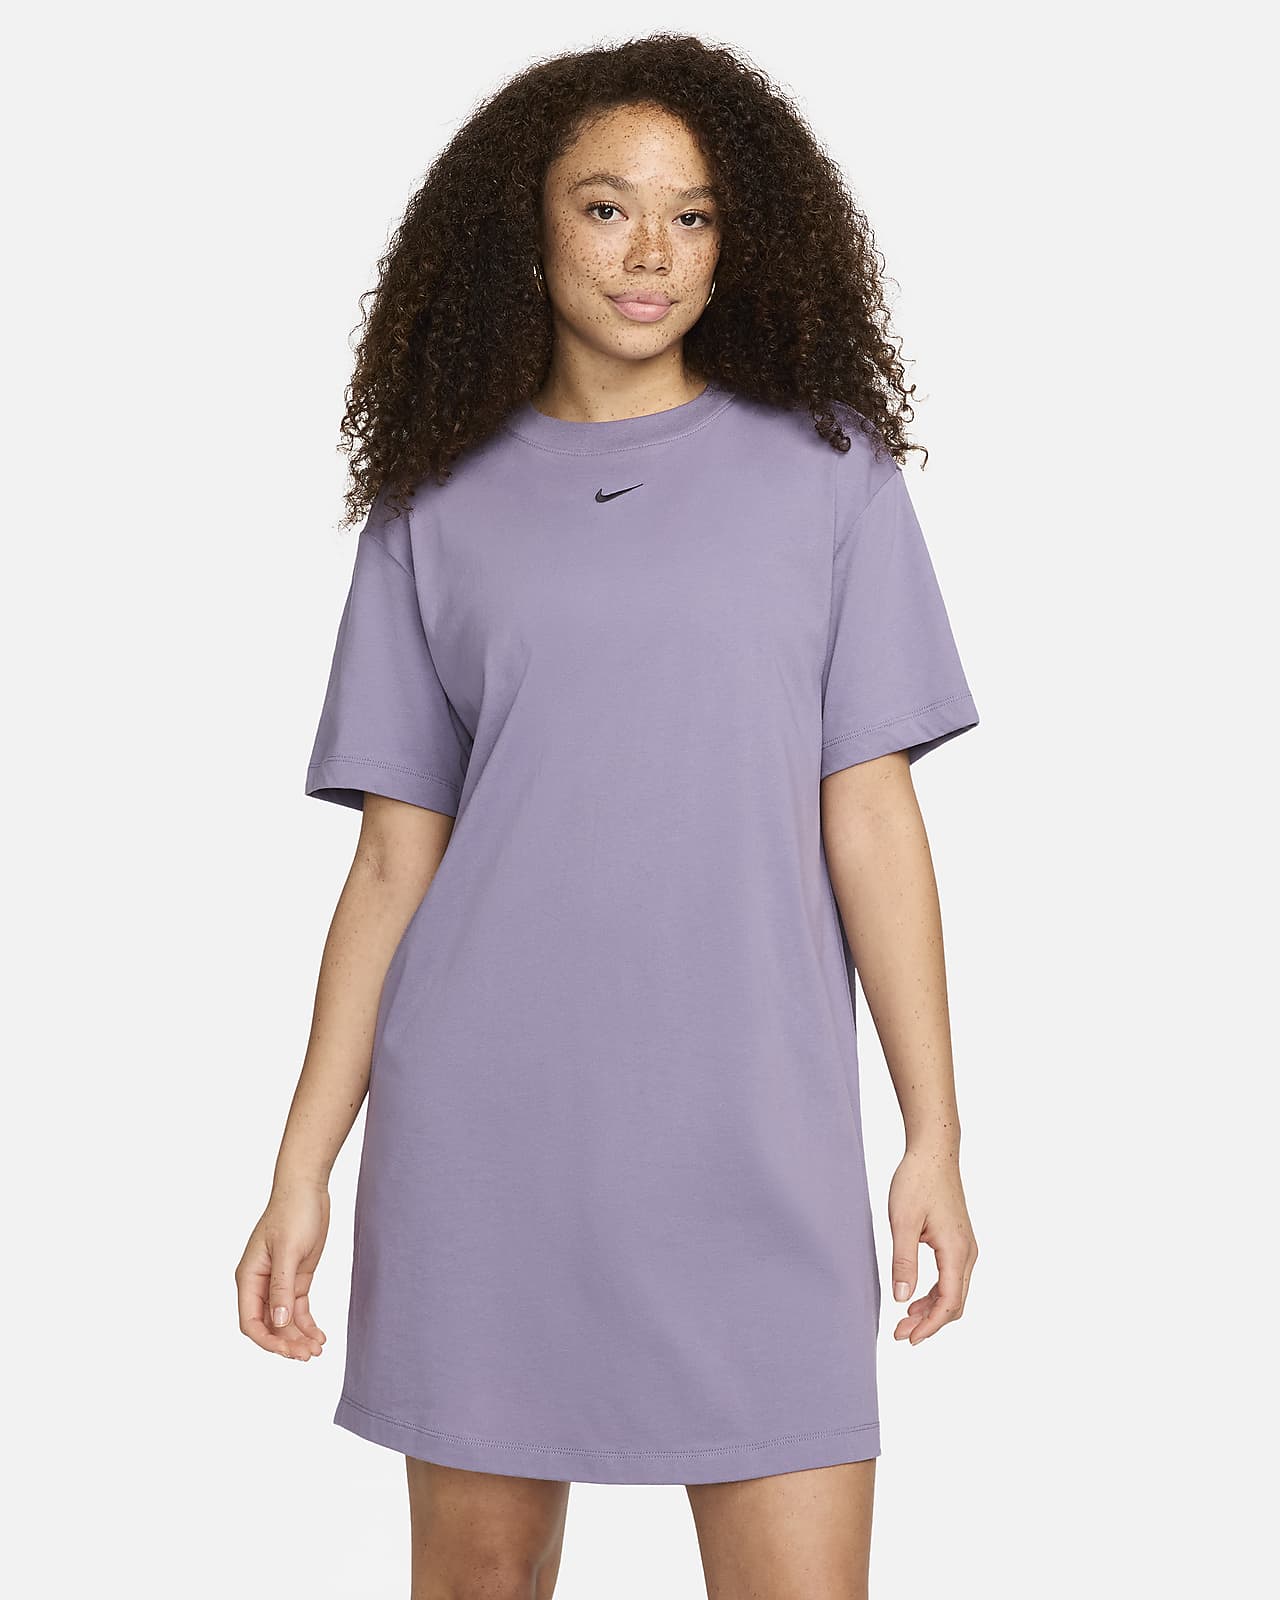 Women's Signature Knit T-Shirt Dress | Dresses & Skirts at L.L.Bean